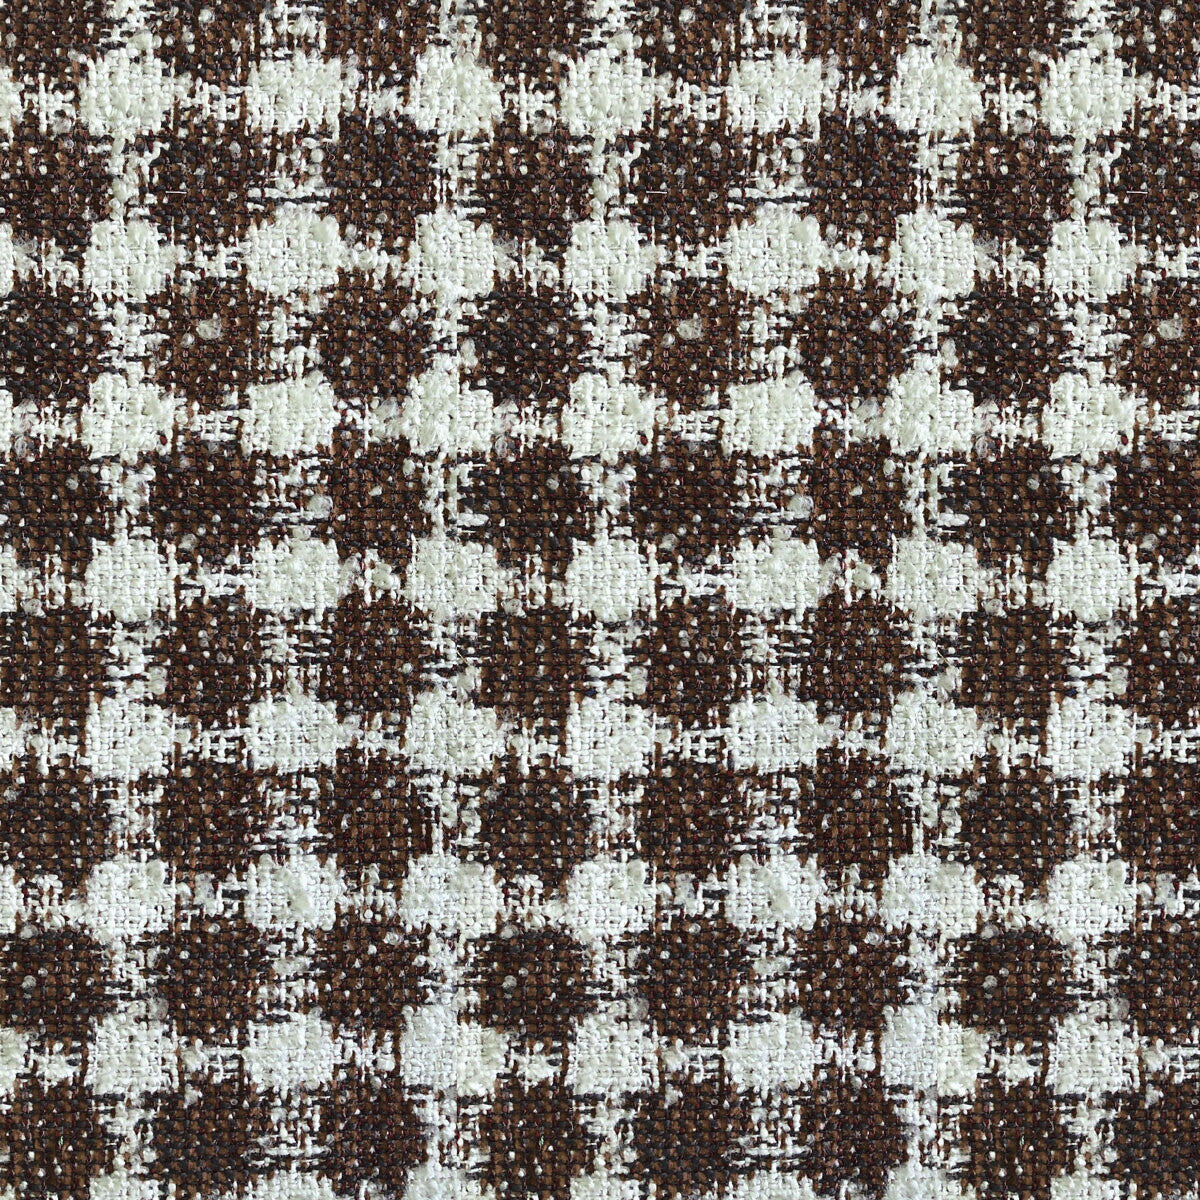 Pedraza fabric in chocolate color - pattern LCT1050.002.0 - by Gaston y Daniela in the Lorenzo Castillo VI collection